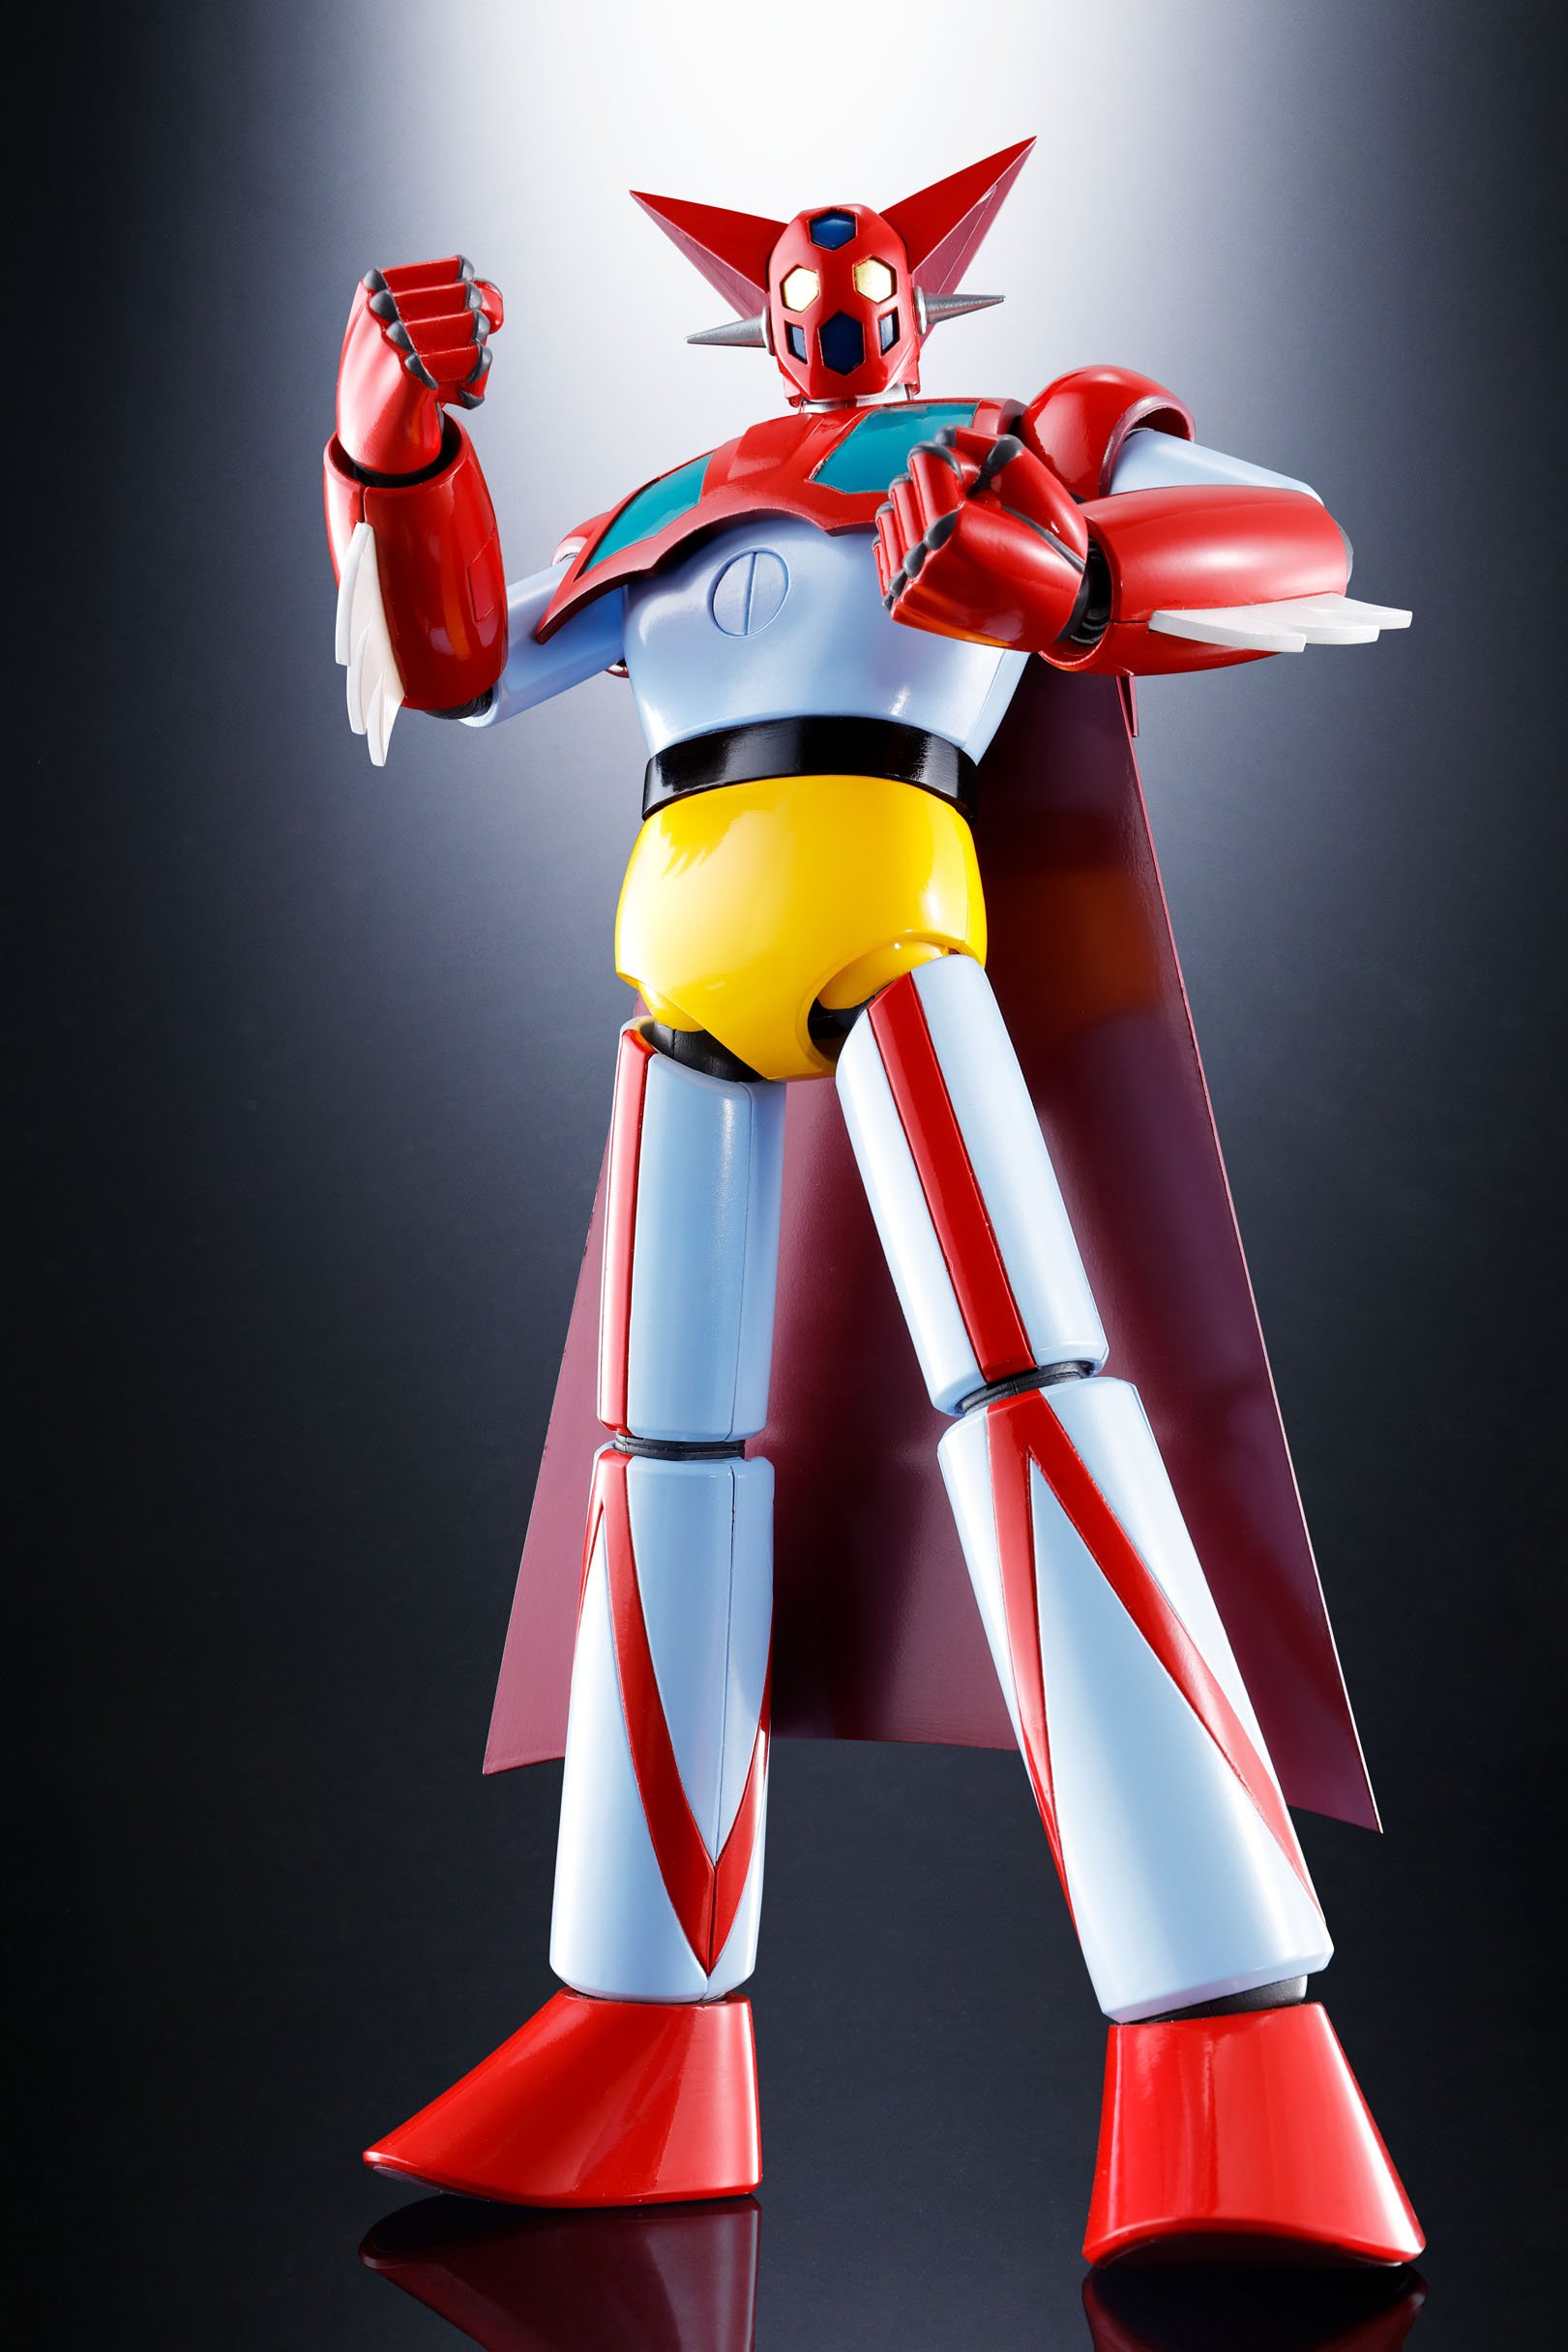 Bandai Tamashii Nations Gx-74 Mazinger Z TV Version Soul of Chogokin Action Figure